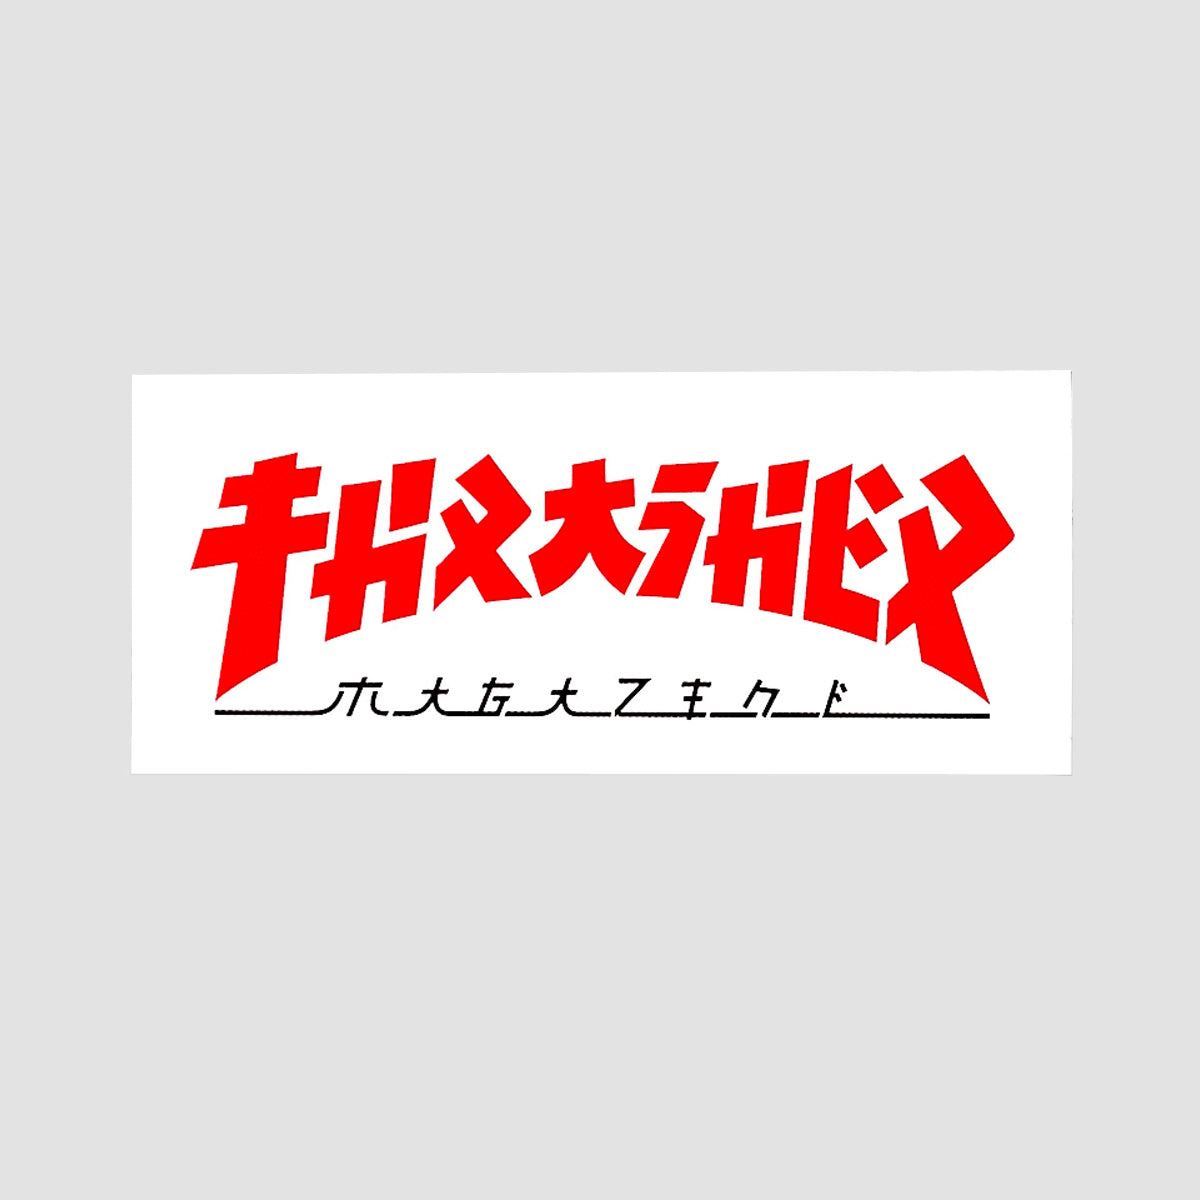 Thrasher Godzilla Rectangle Sticker Red/White 150x65mm